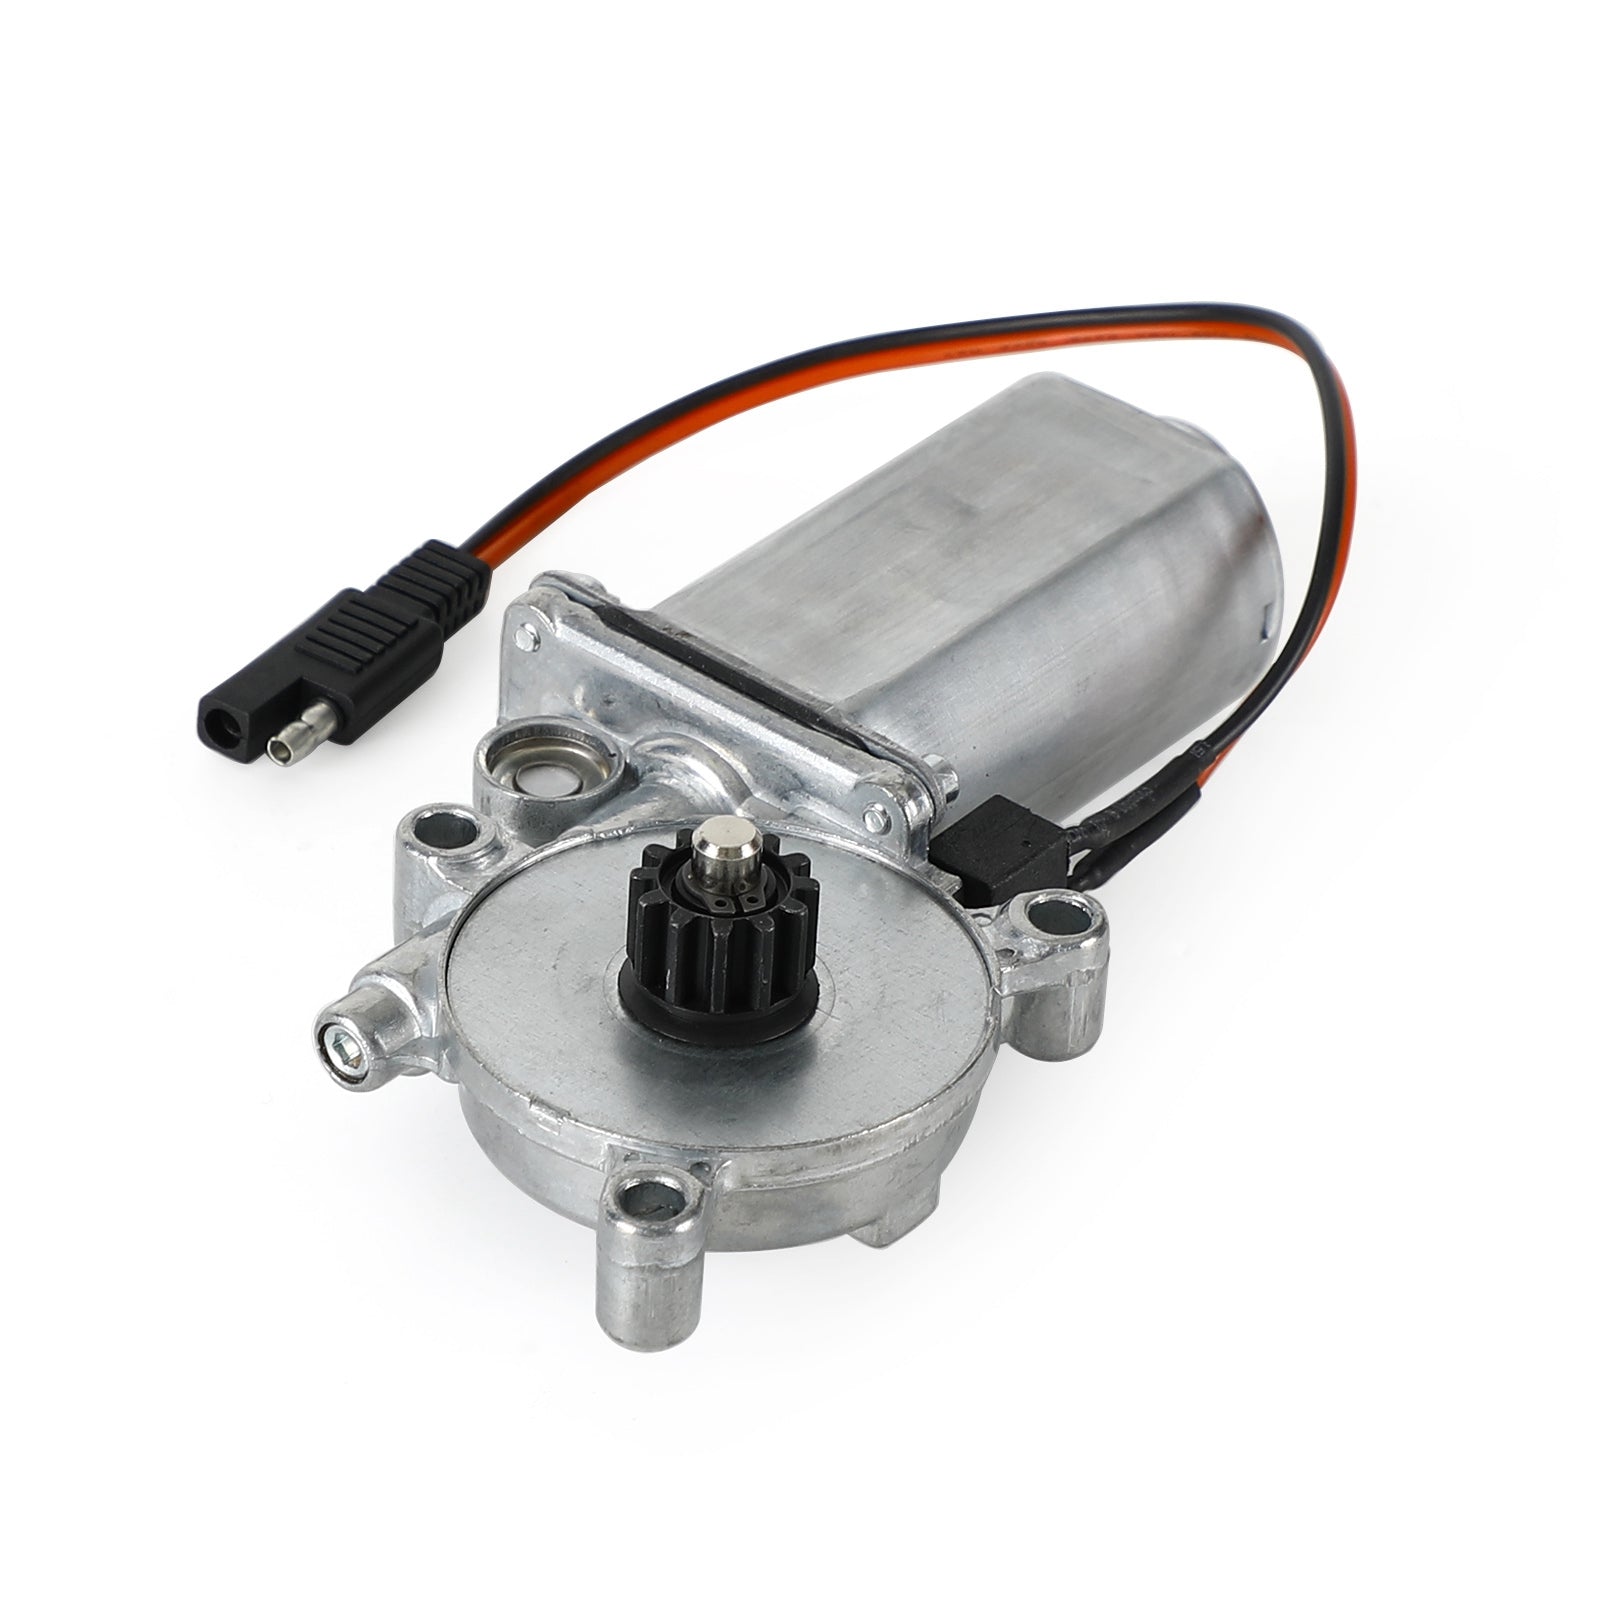 Motorhome RV Power Awning Motor 373566 266149 for Solera Venture LCI Lippert New